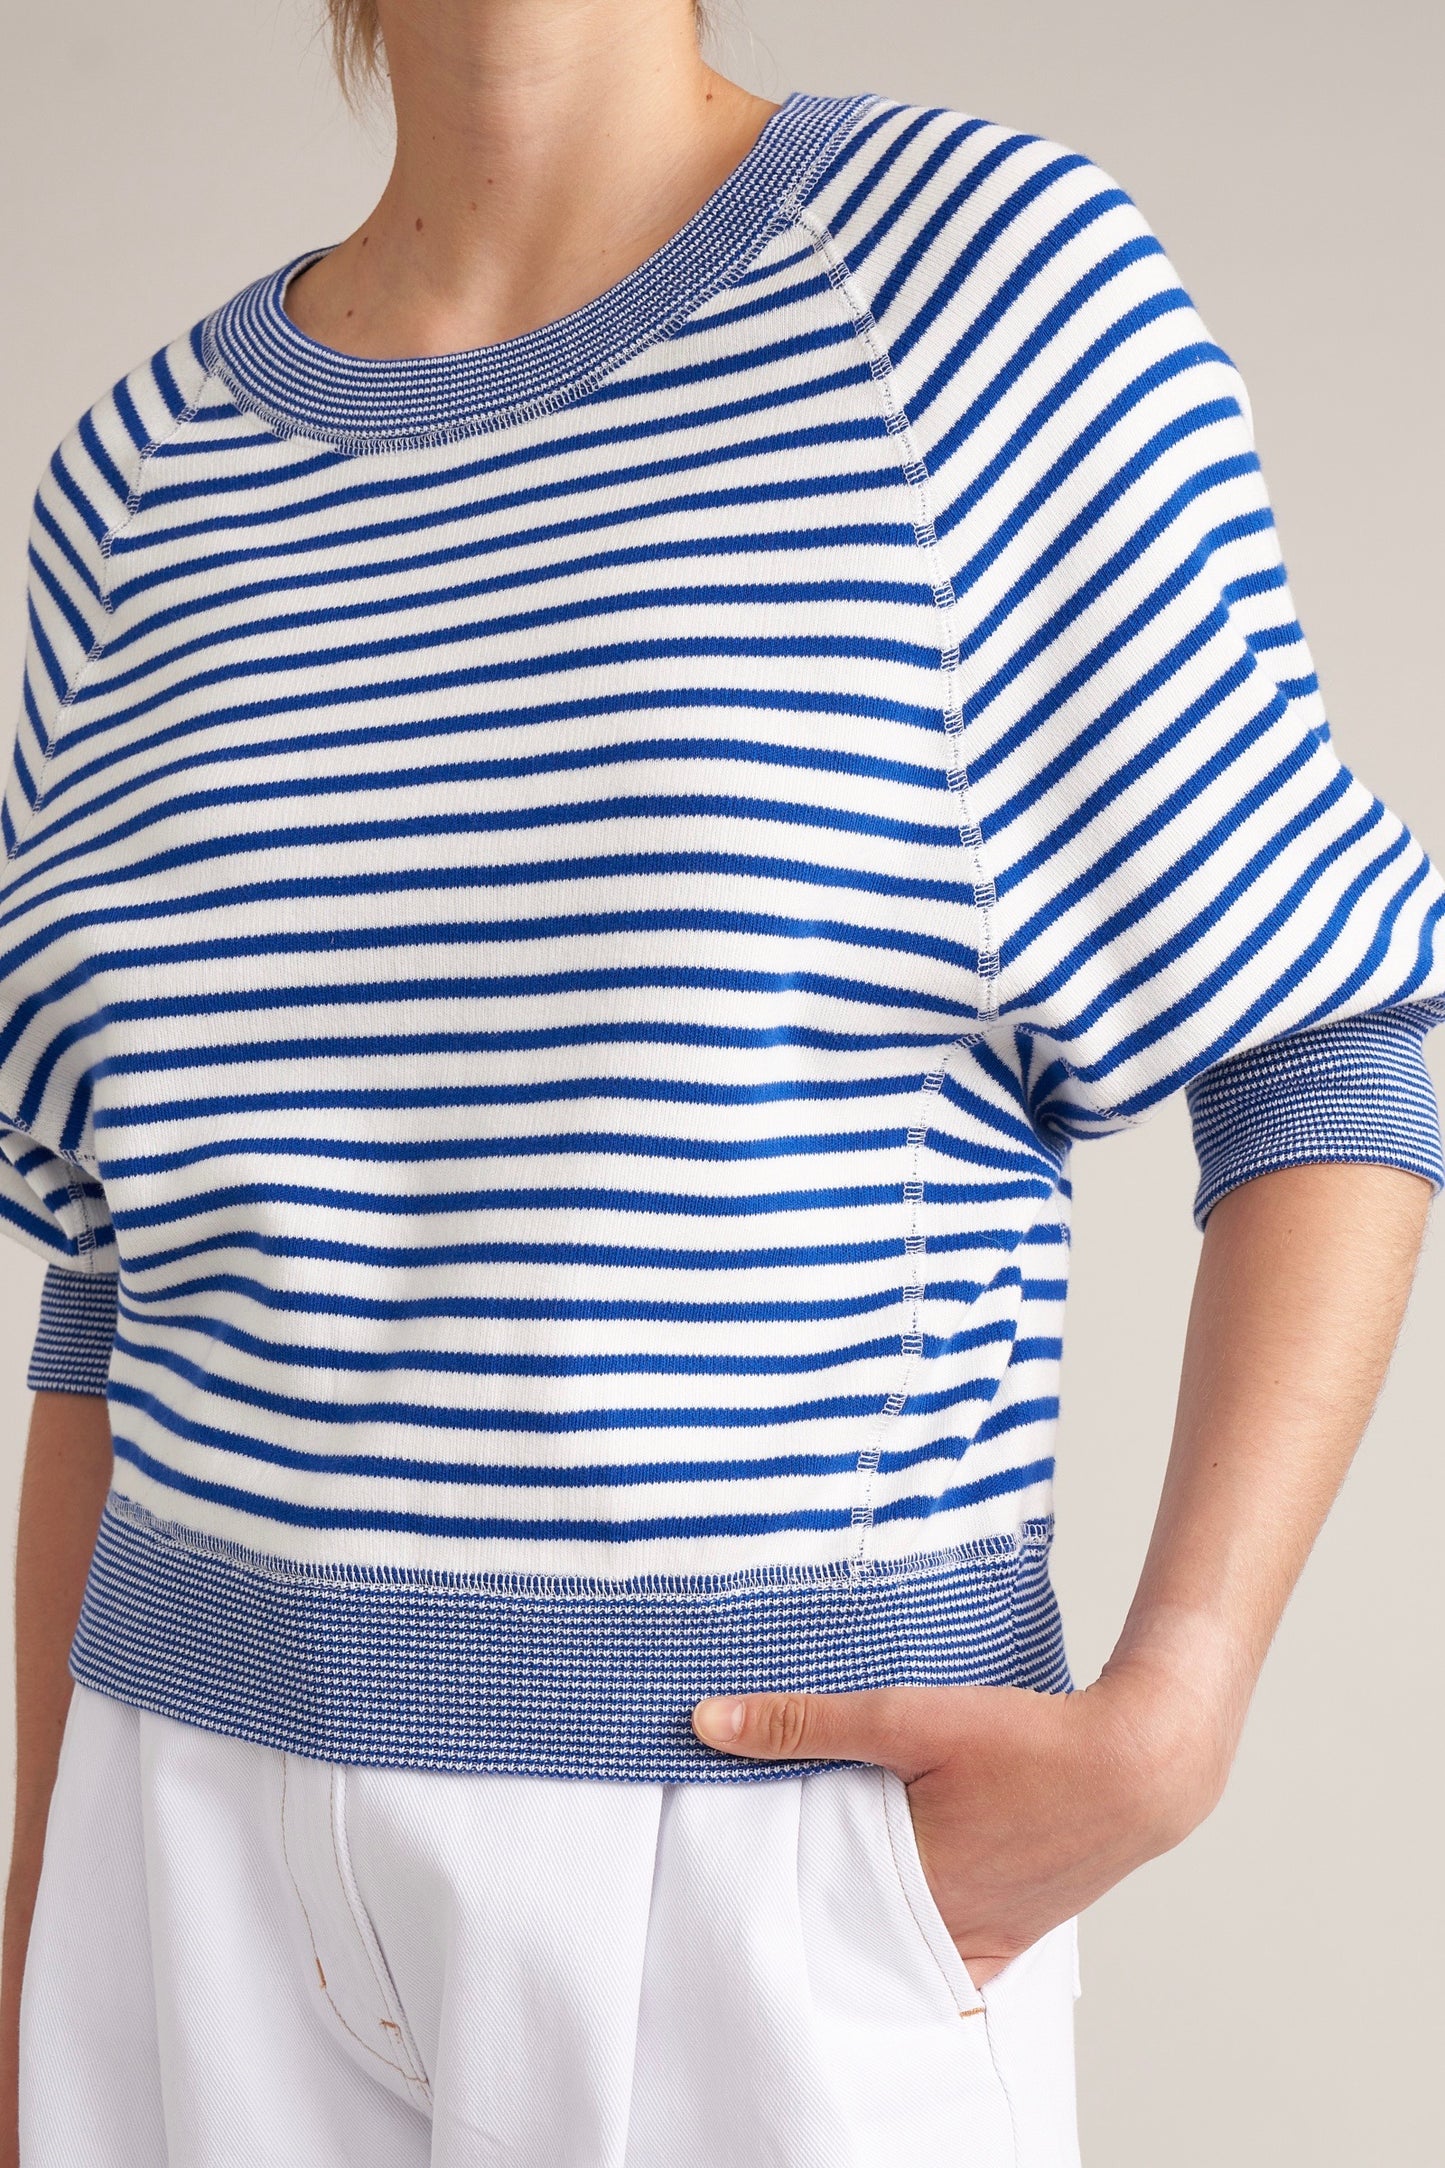 Bellerose - Anglet Sweater: Stripe A